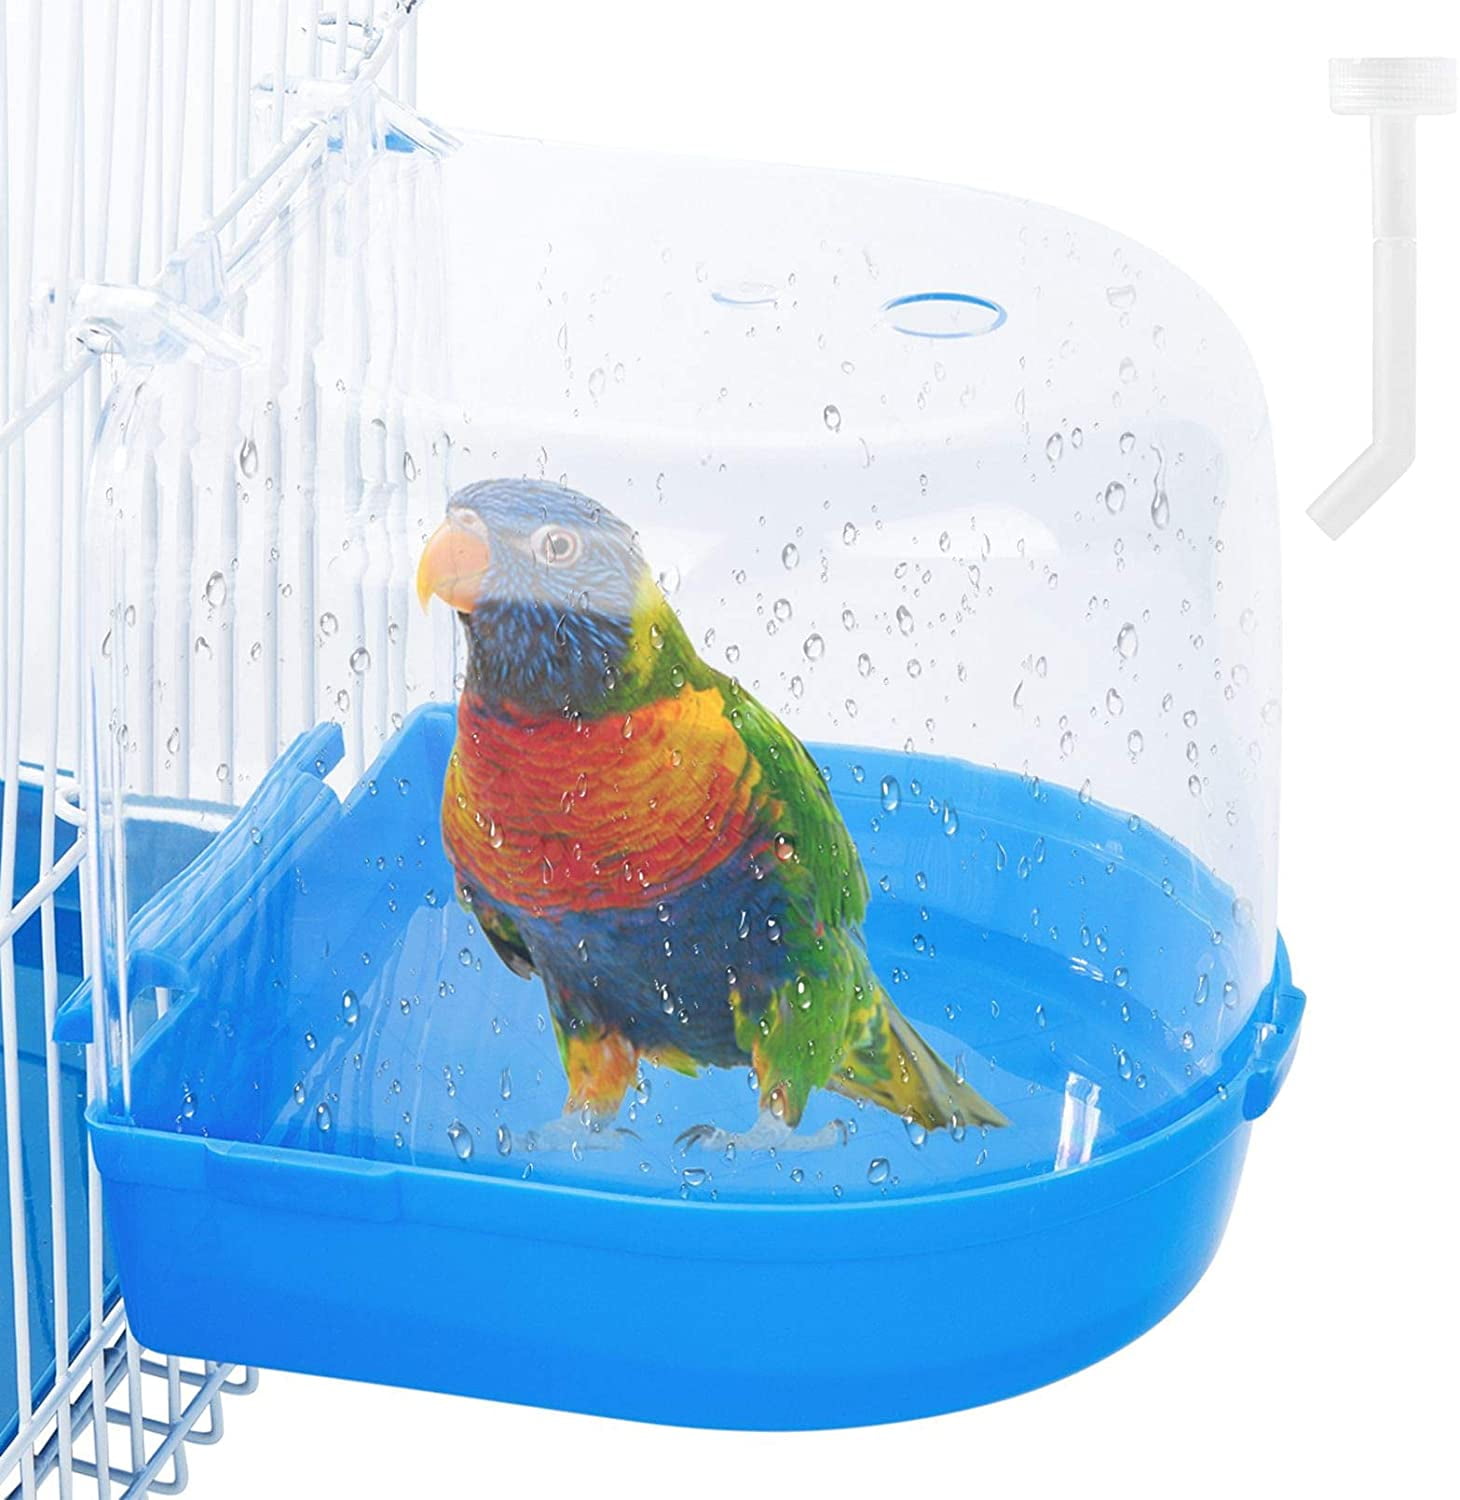 Fansunta Bird Bath Box Parakeet Caged Bird Bathing Tub for Small Birds Canary Budgies Parrots Blue 